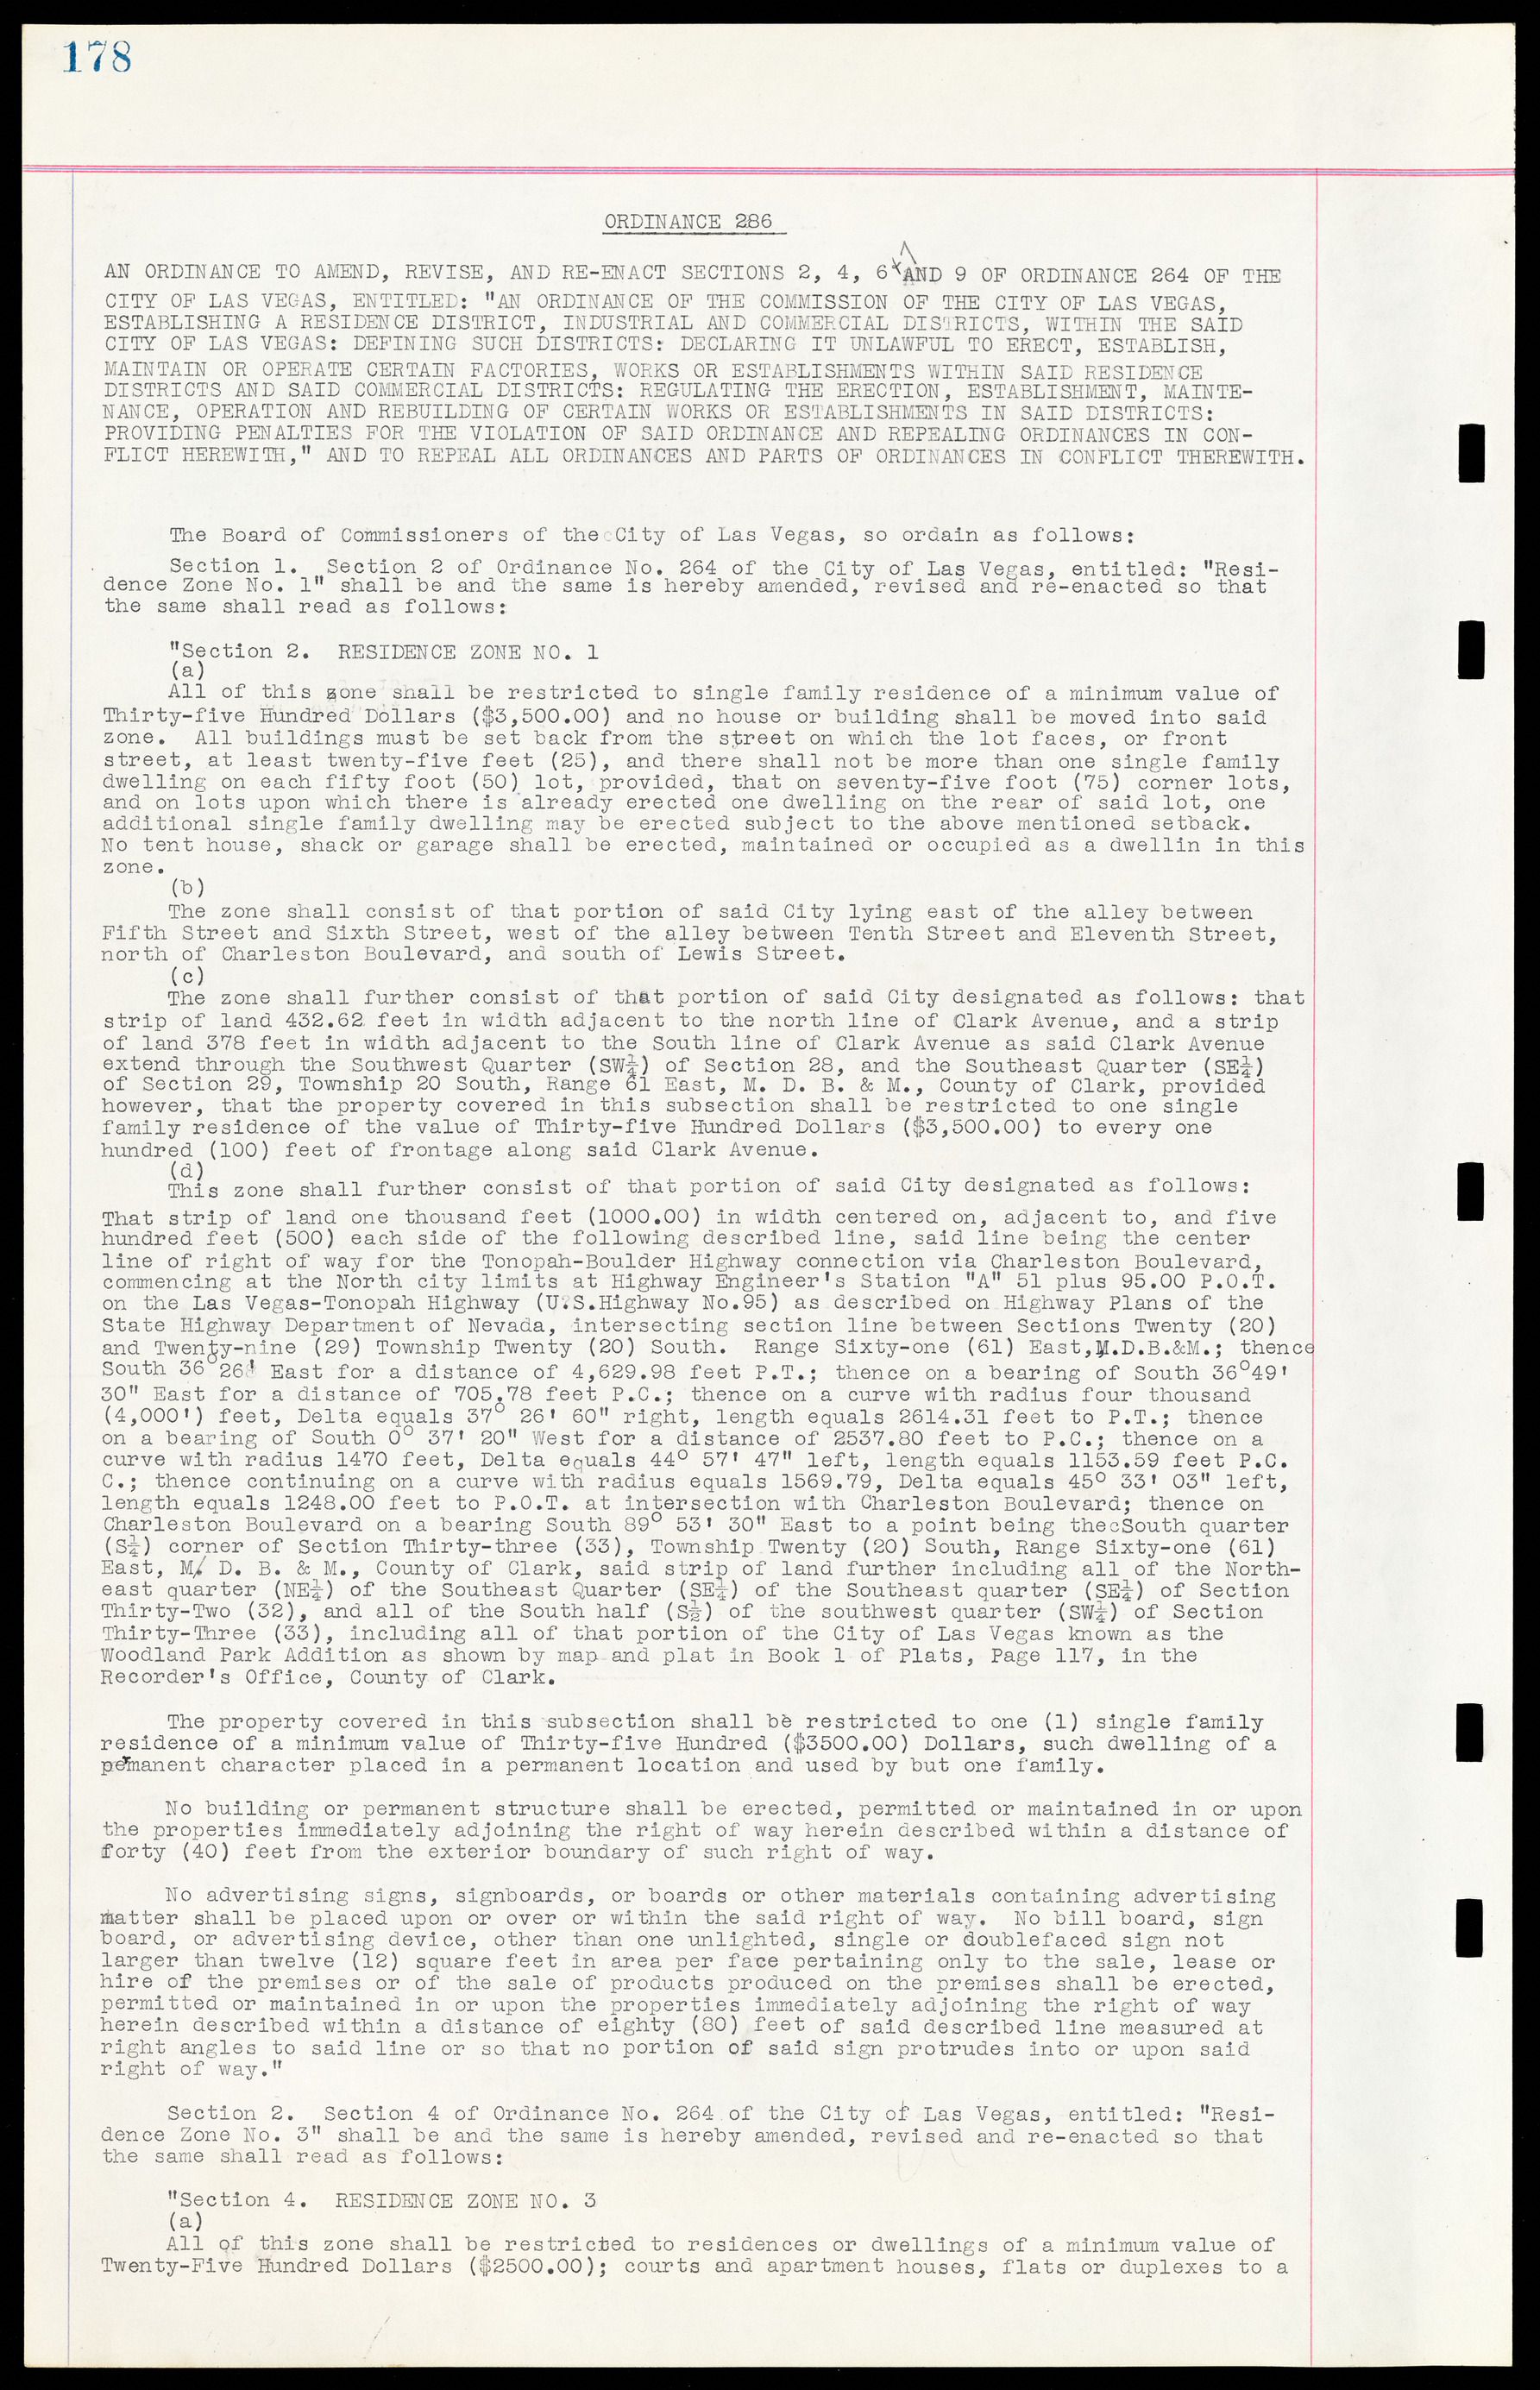 Las Vegas City Ordinances, March 31, 1933 to October 25, 1950, lvc000014-198